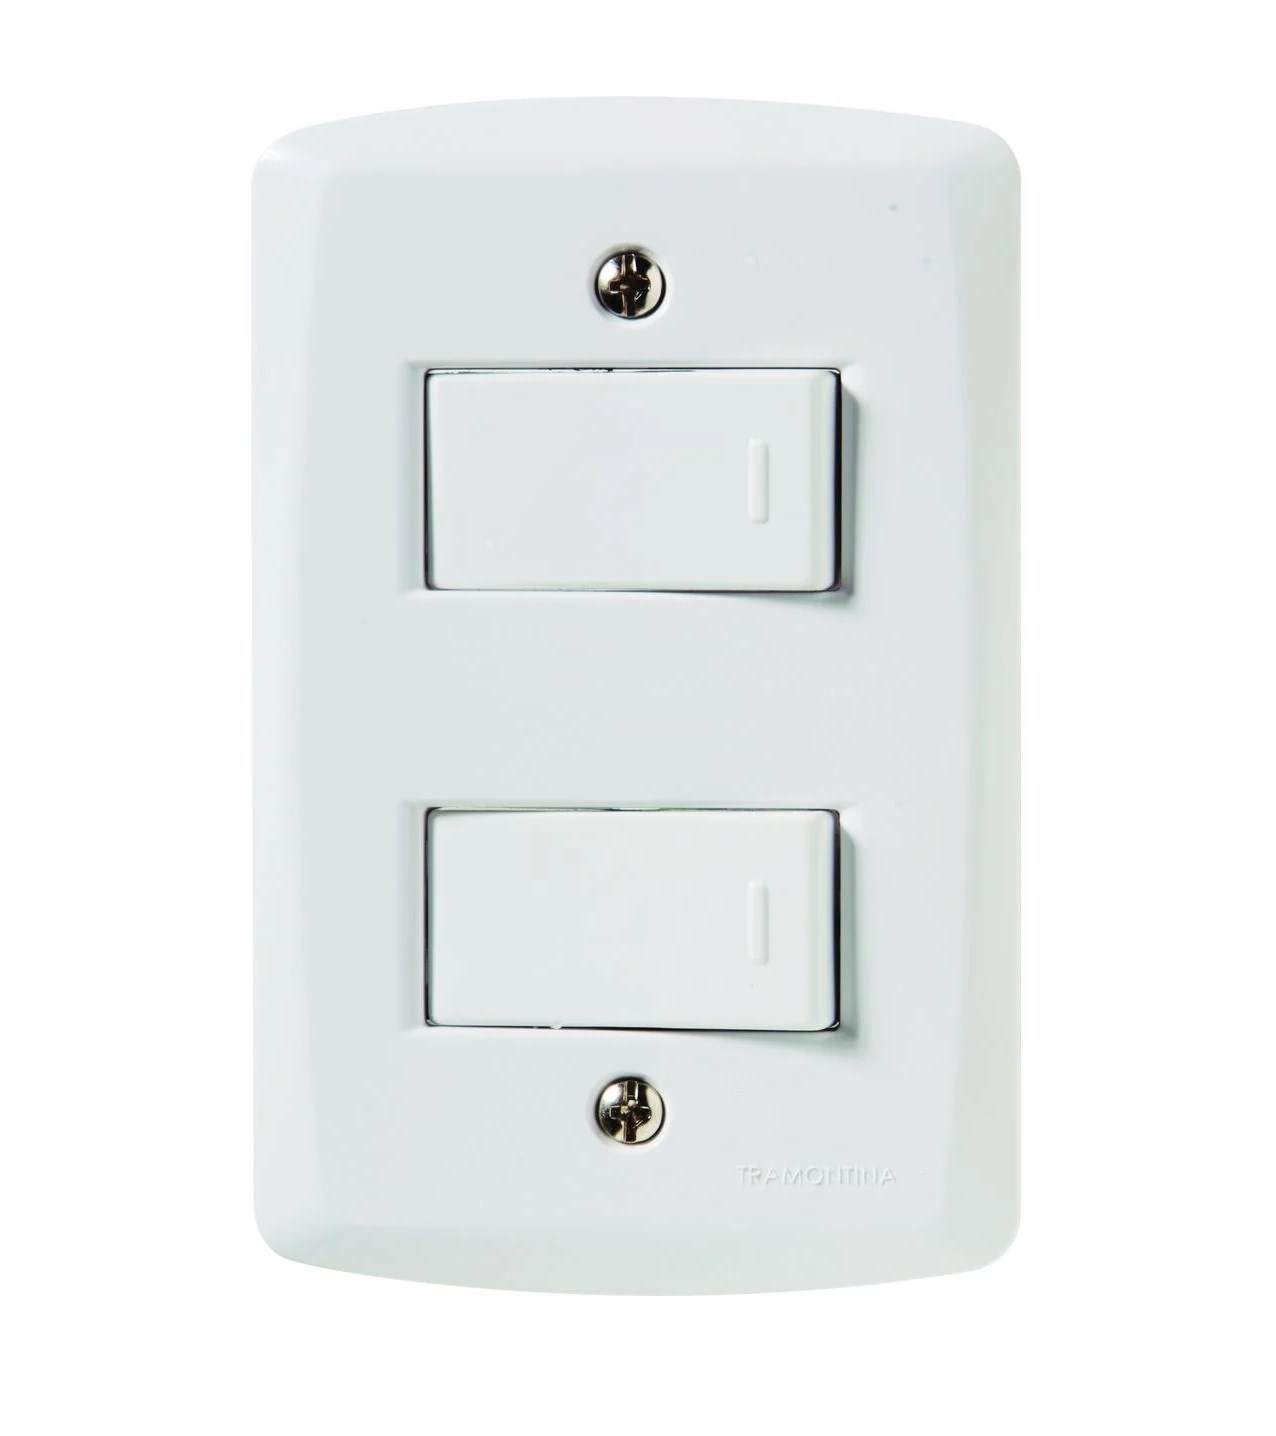 Conjunto 4x2 com 2 Interruptores Simples 10 A 250 V Tramontina Lux2 Branco - 57145040